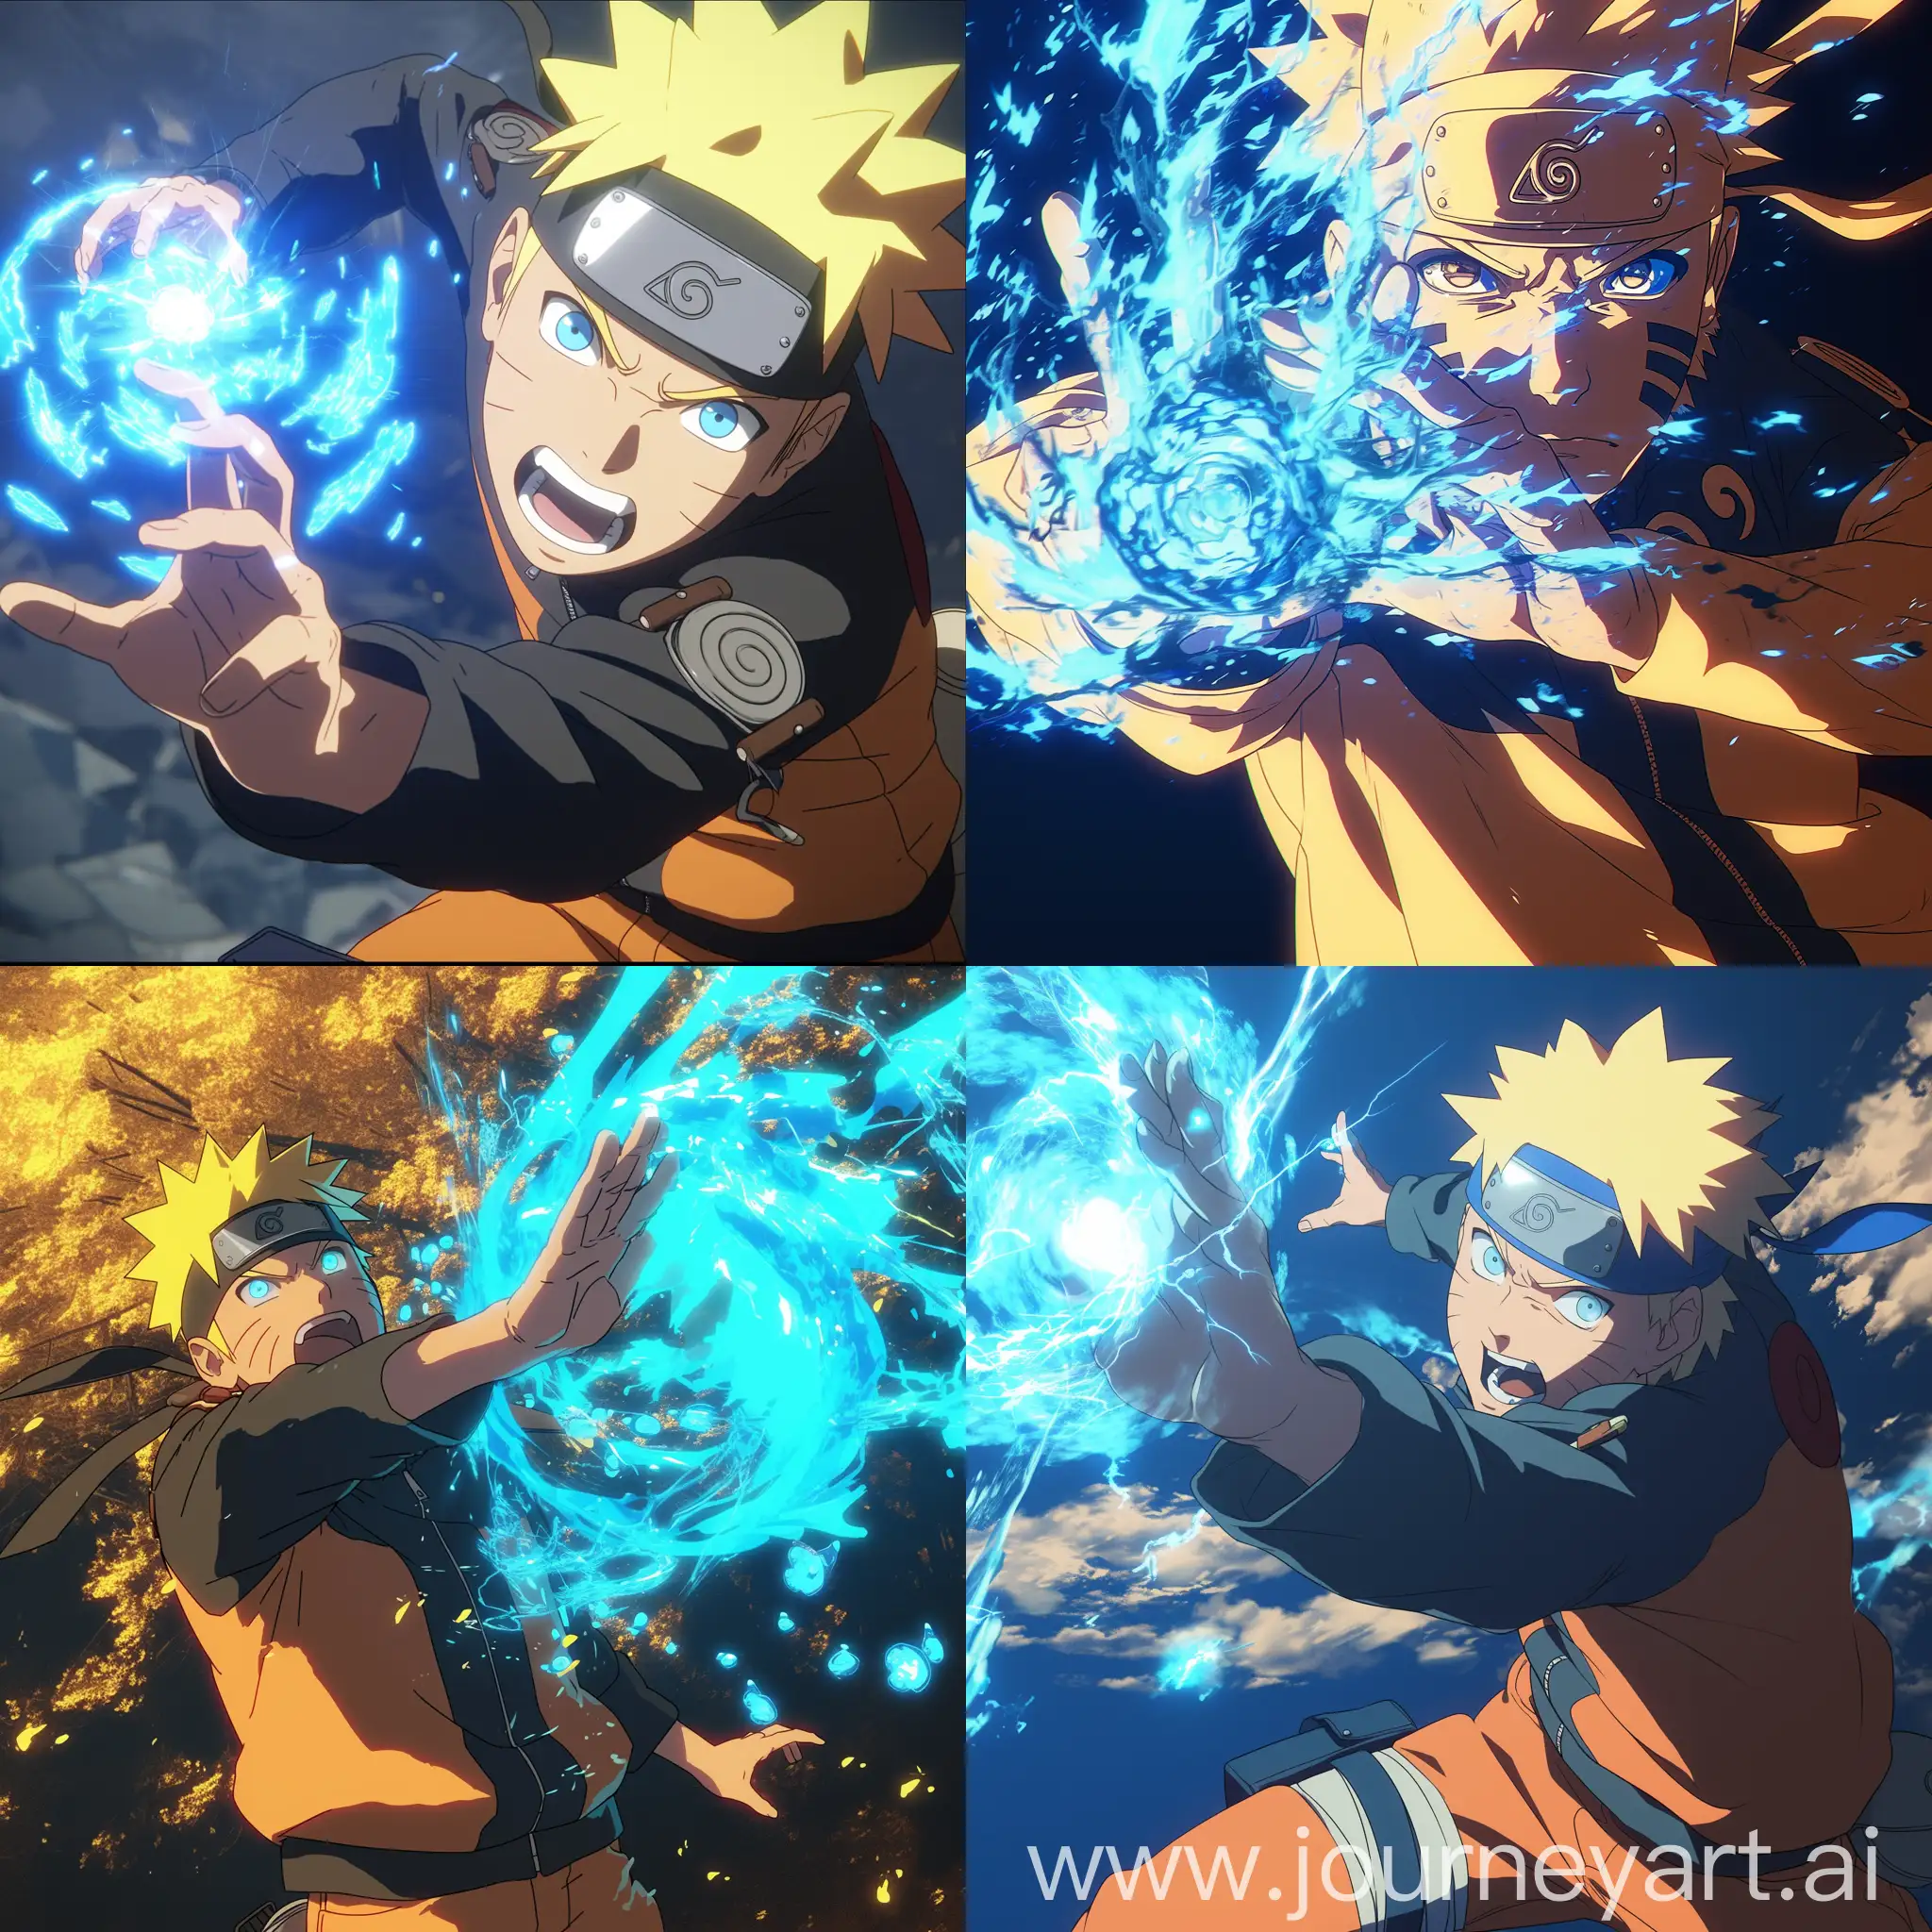 Anime screen grab of Naruto Uzumaki forming a blue Rasengan in his hand, kyuubi mode. --niji 6